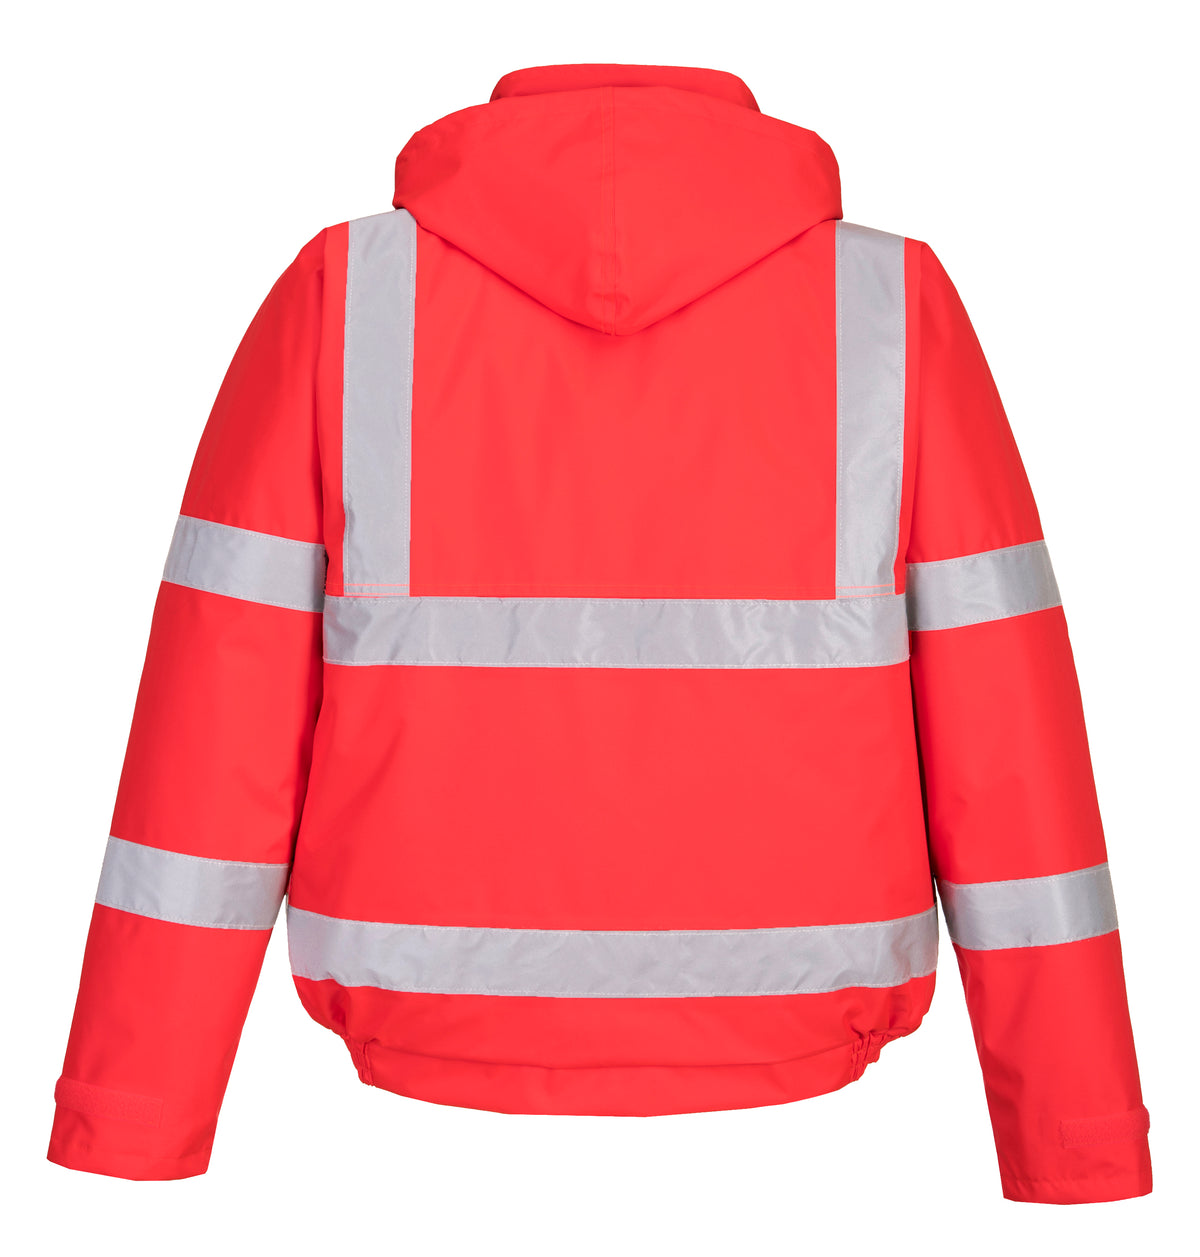 Mens Hi Vis Viz Bomber Workwear Water Resistant Jacket Lined Padded Hood Safety - Hamtons Direct